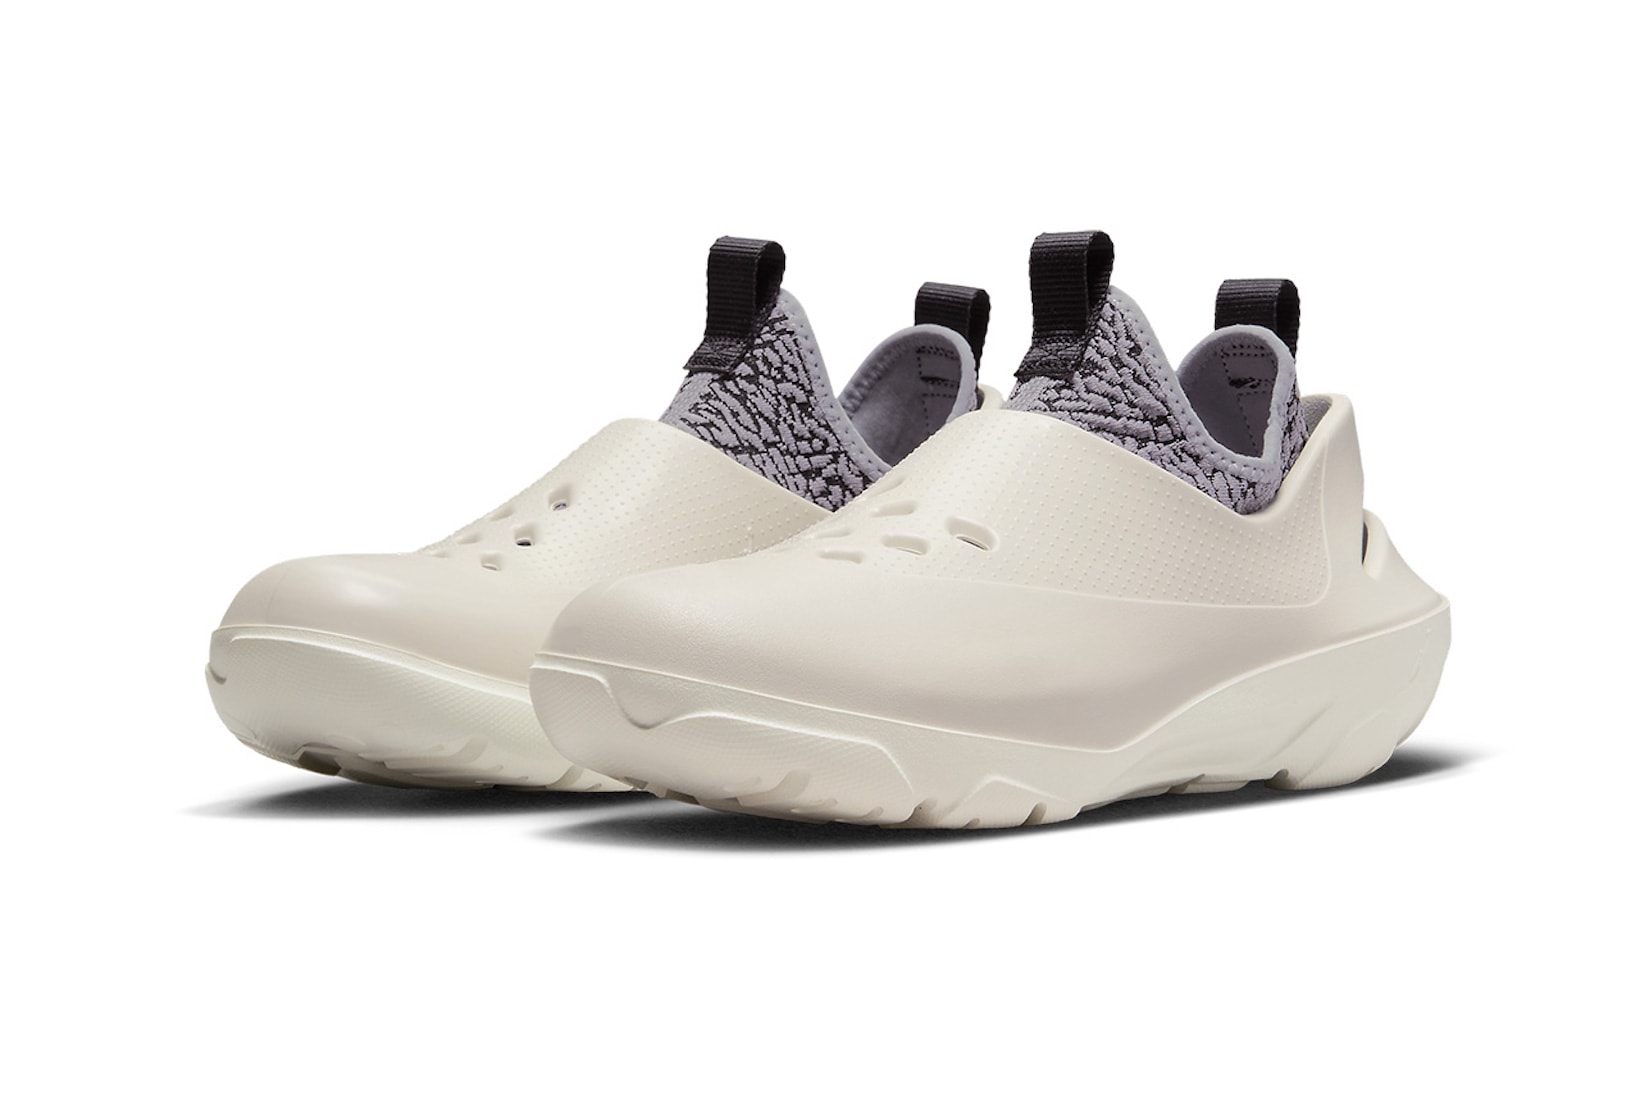 Jordan Brand Clogs Nike Footwear Shoes